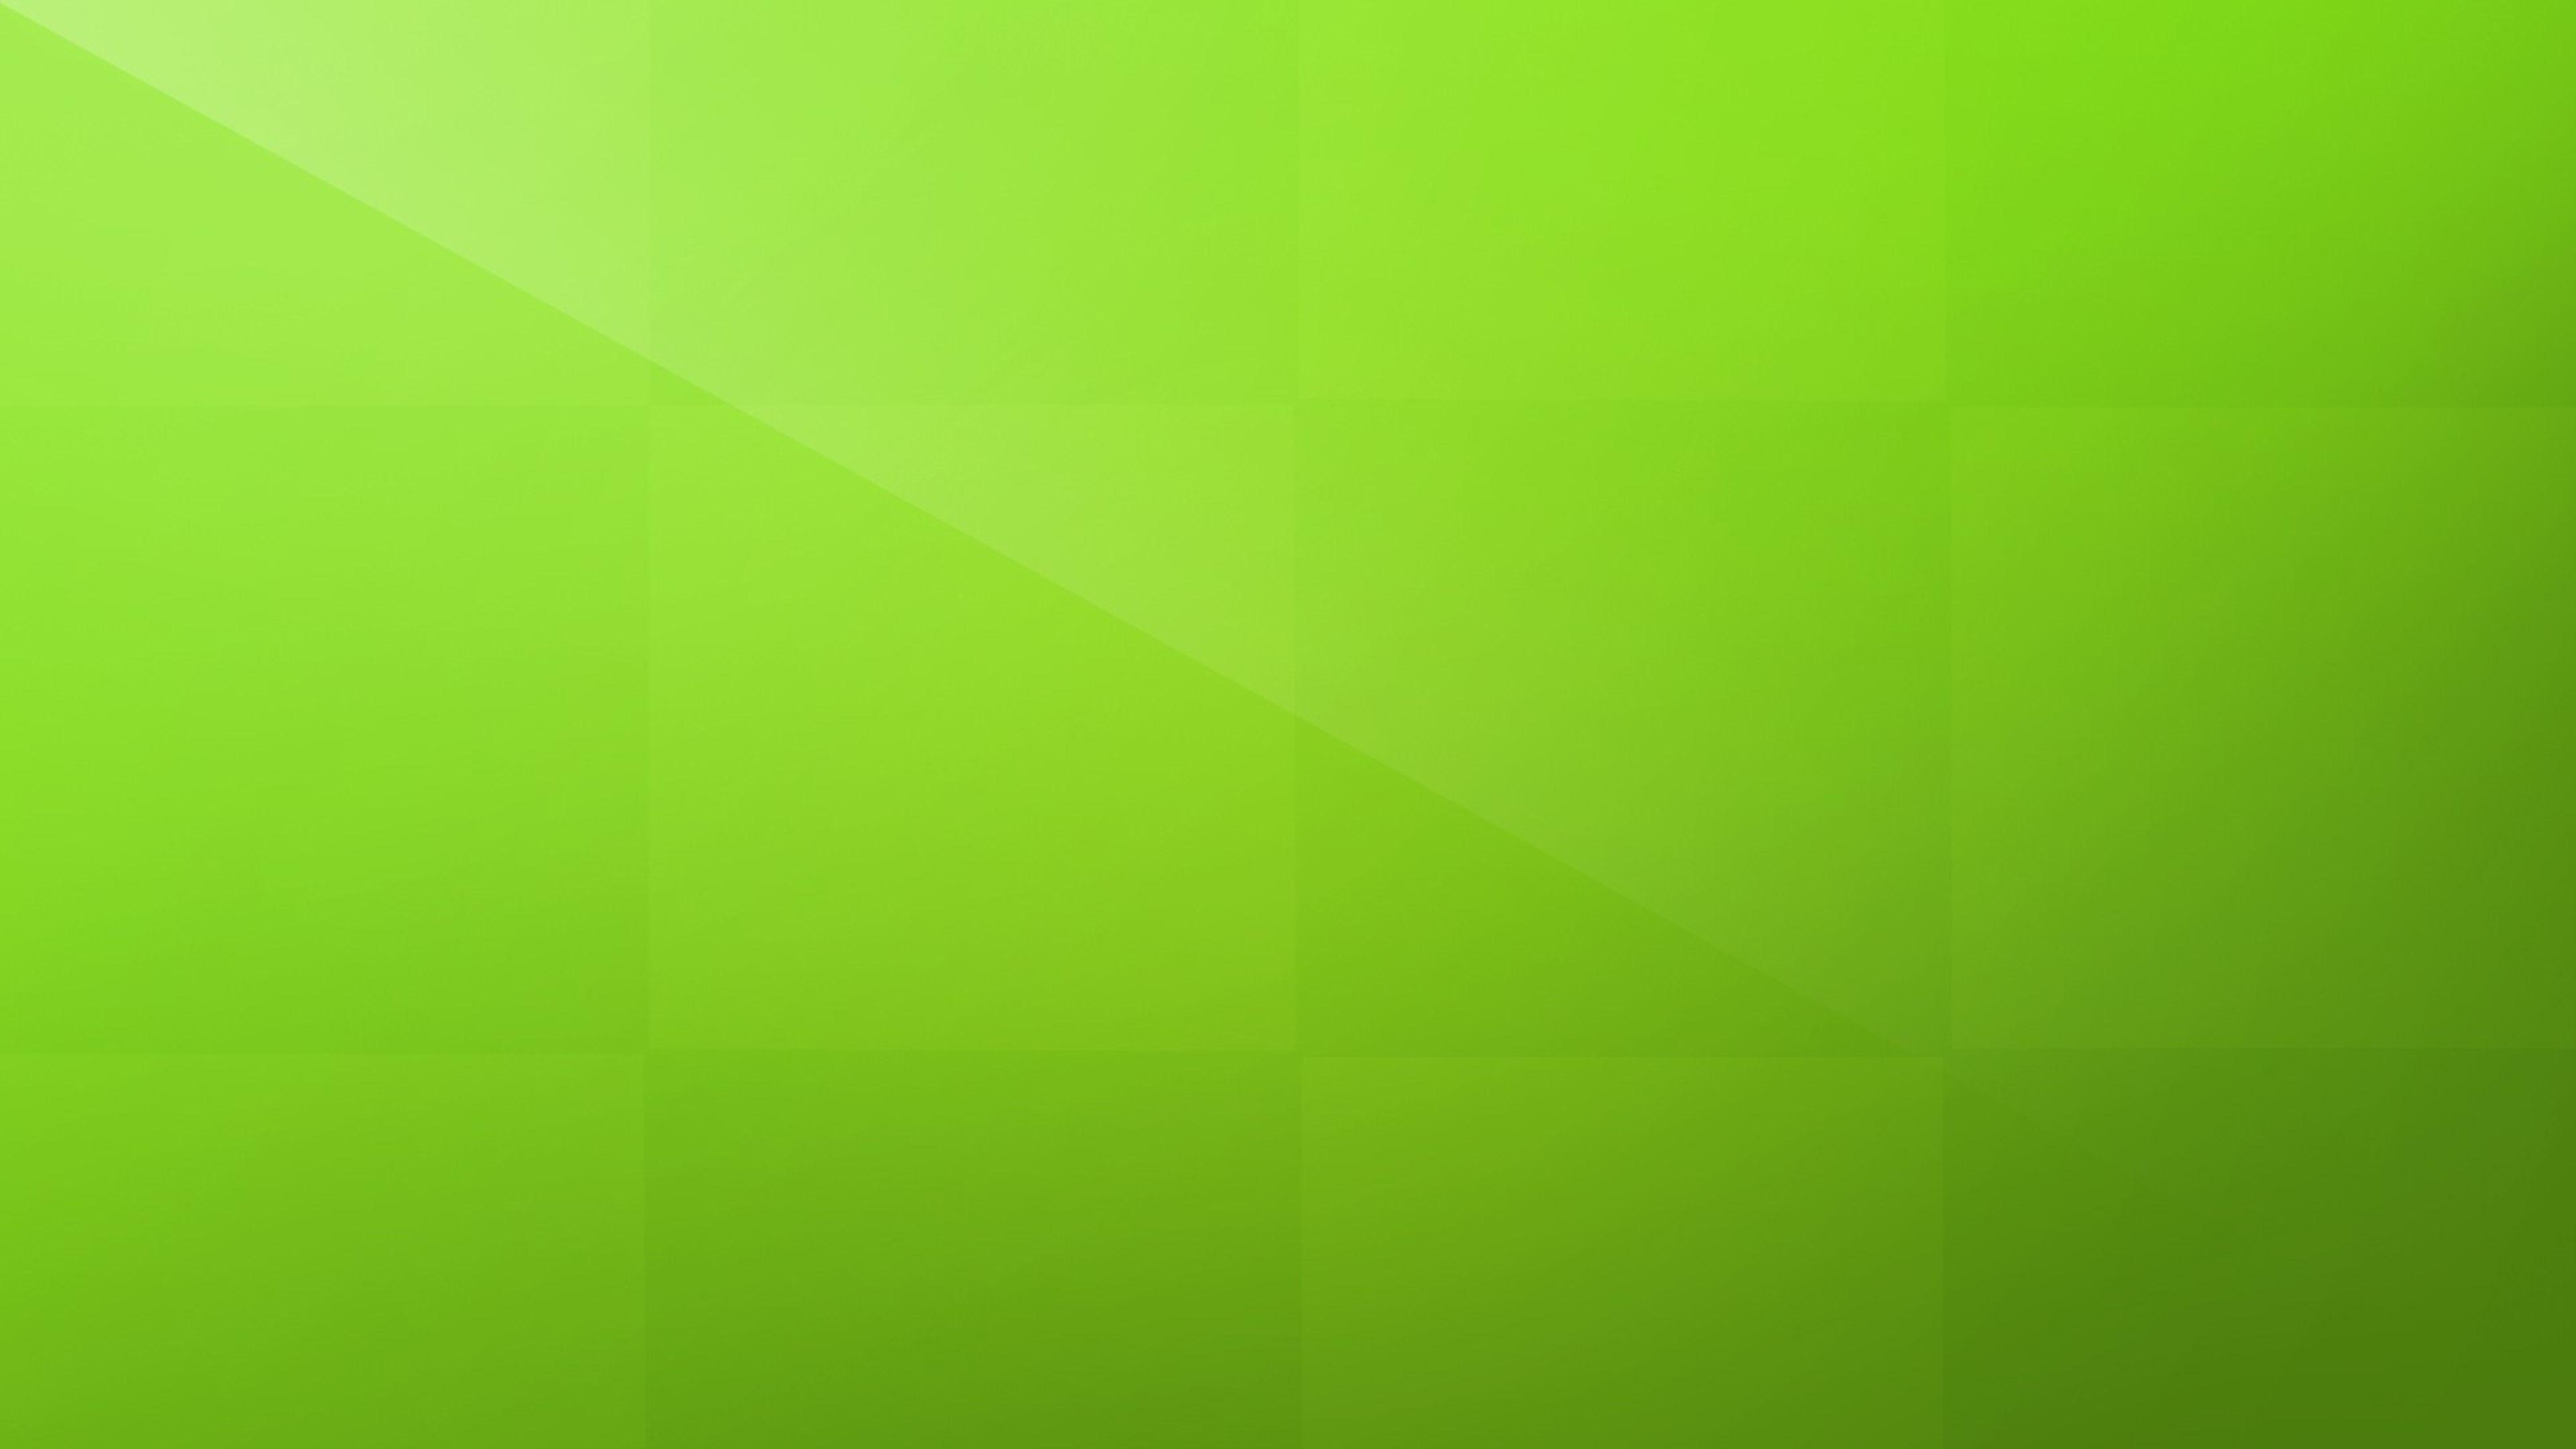 4k green screen background